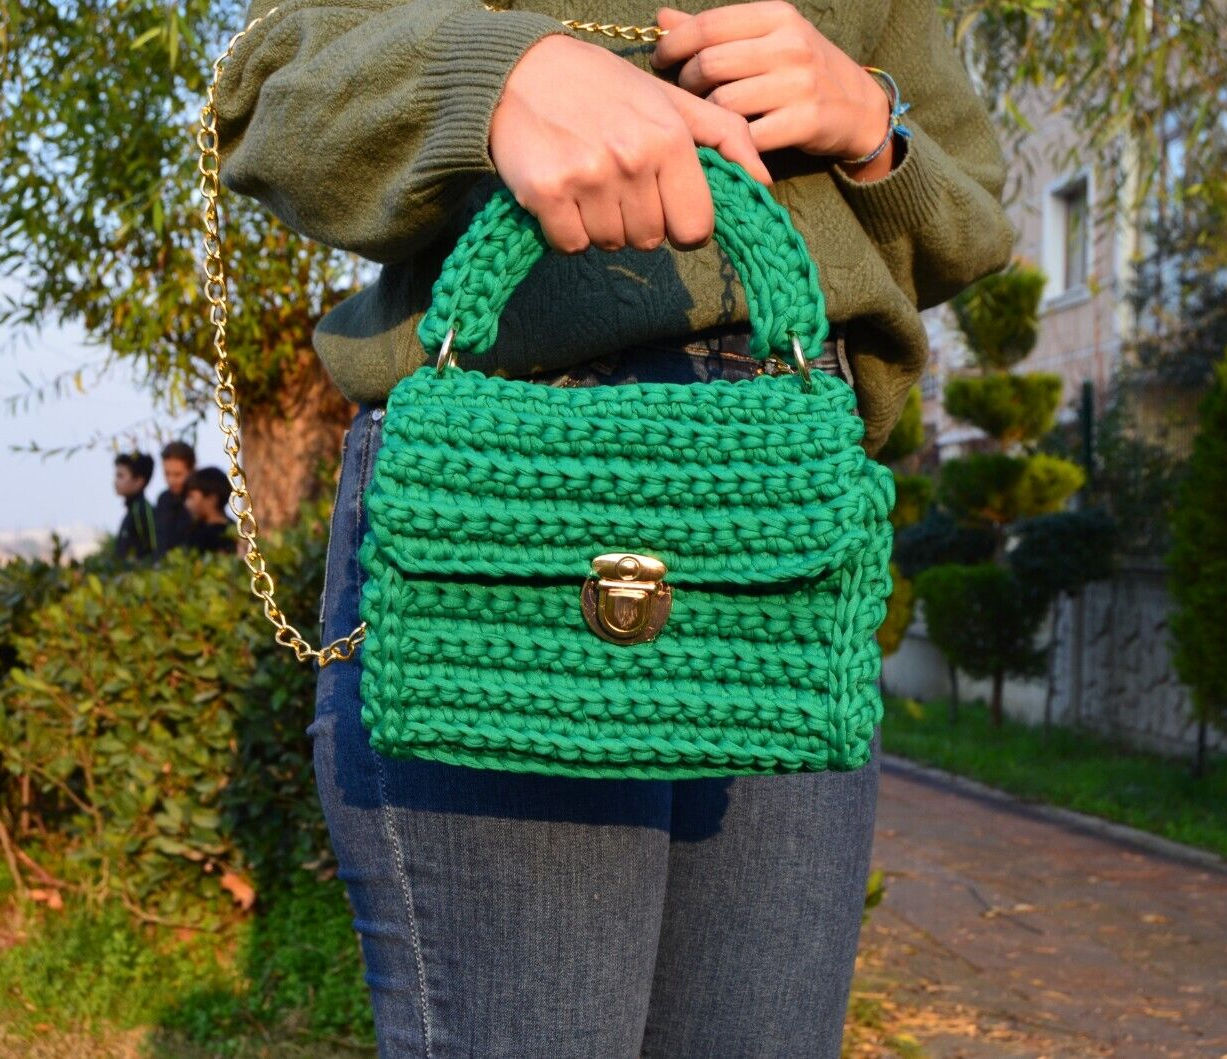 chanel green top handle bag